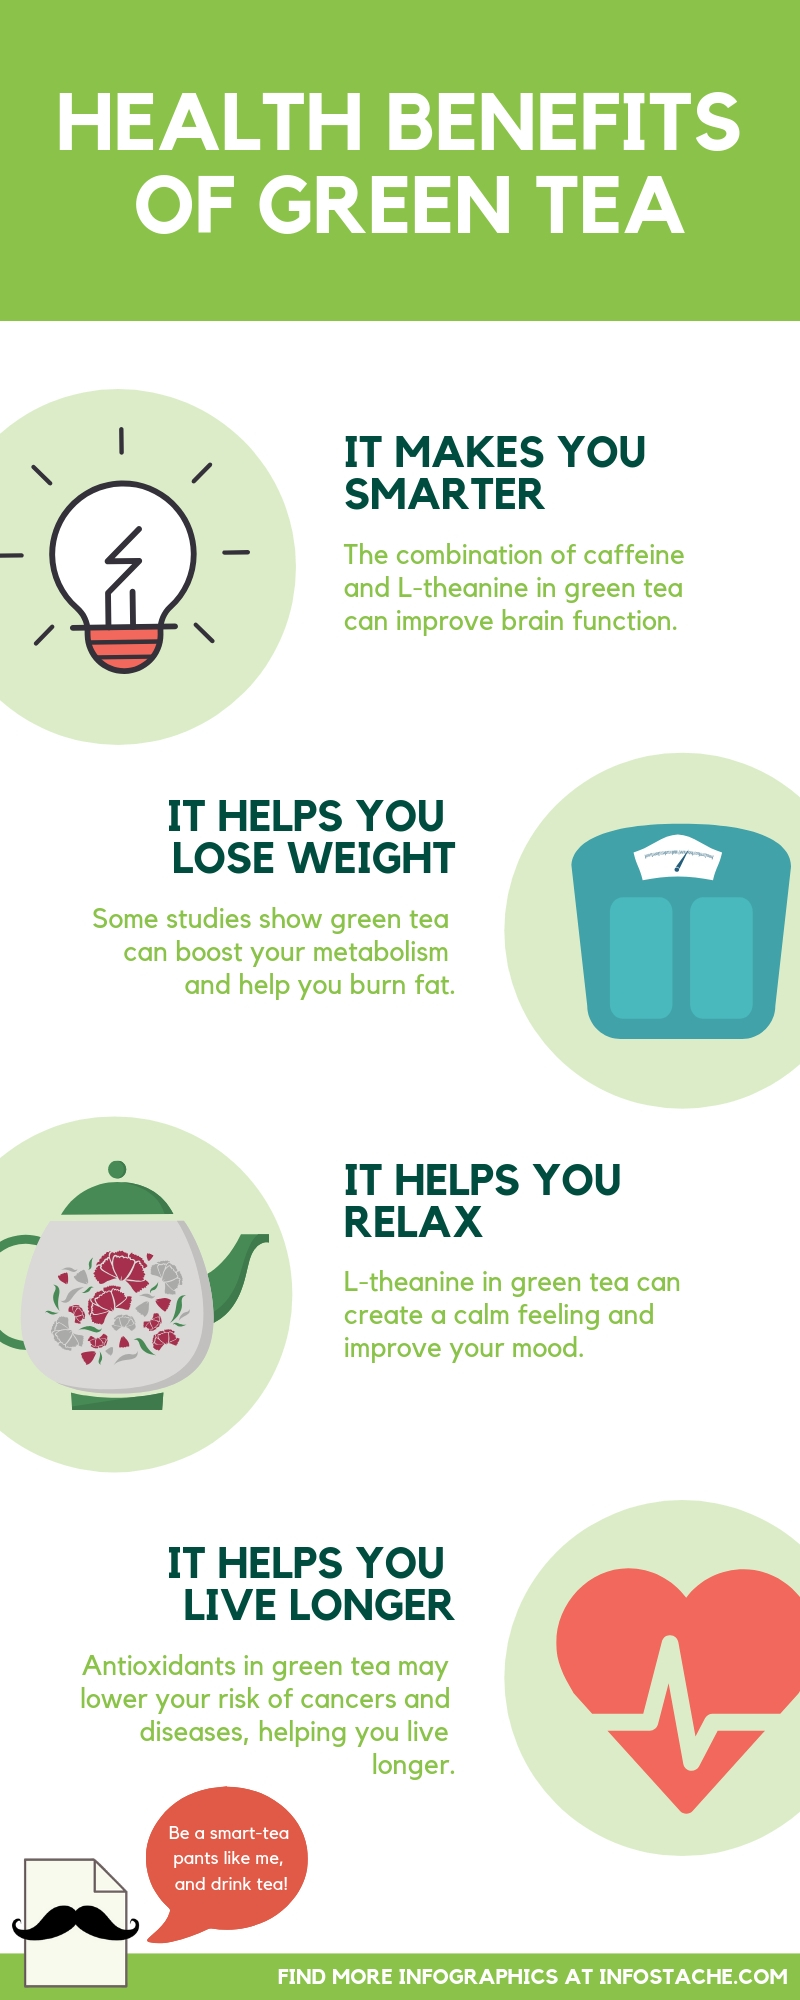 Health Benefits of Green Tea - Infographic